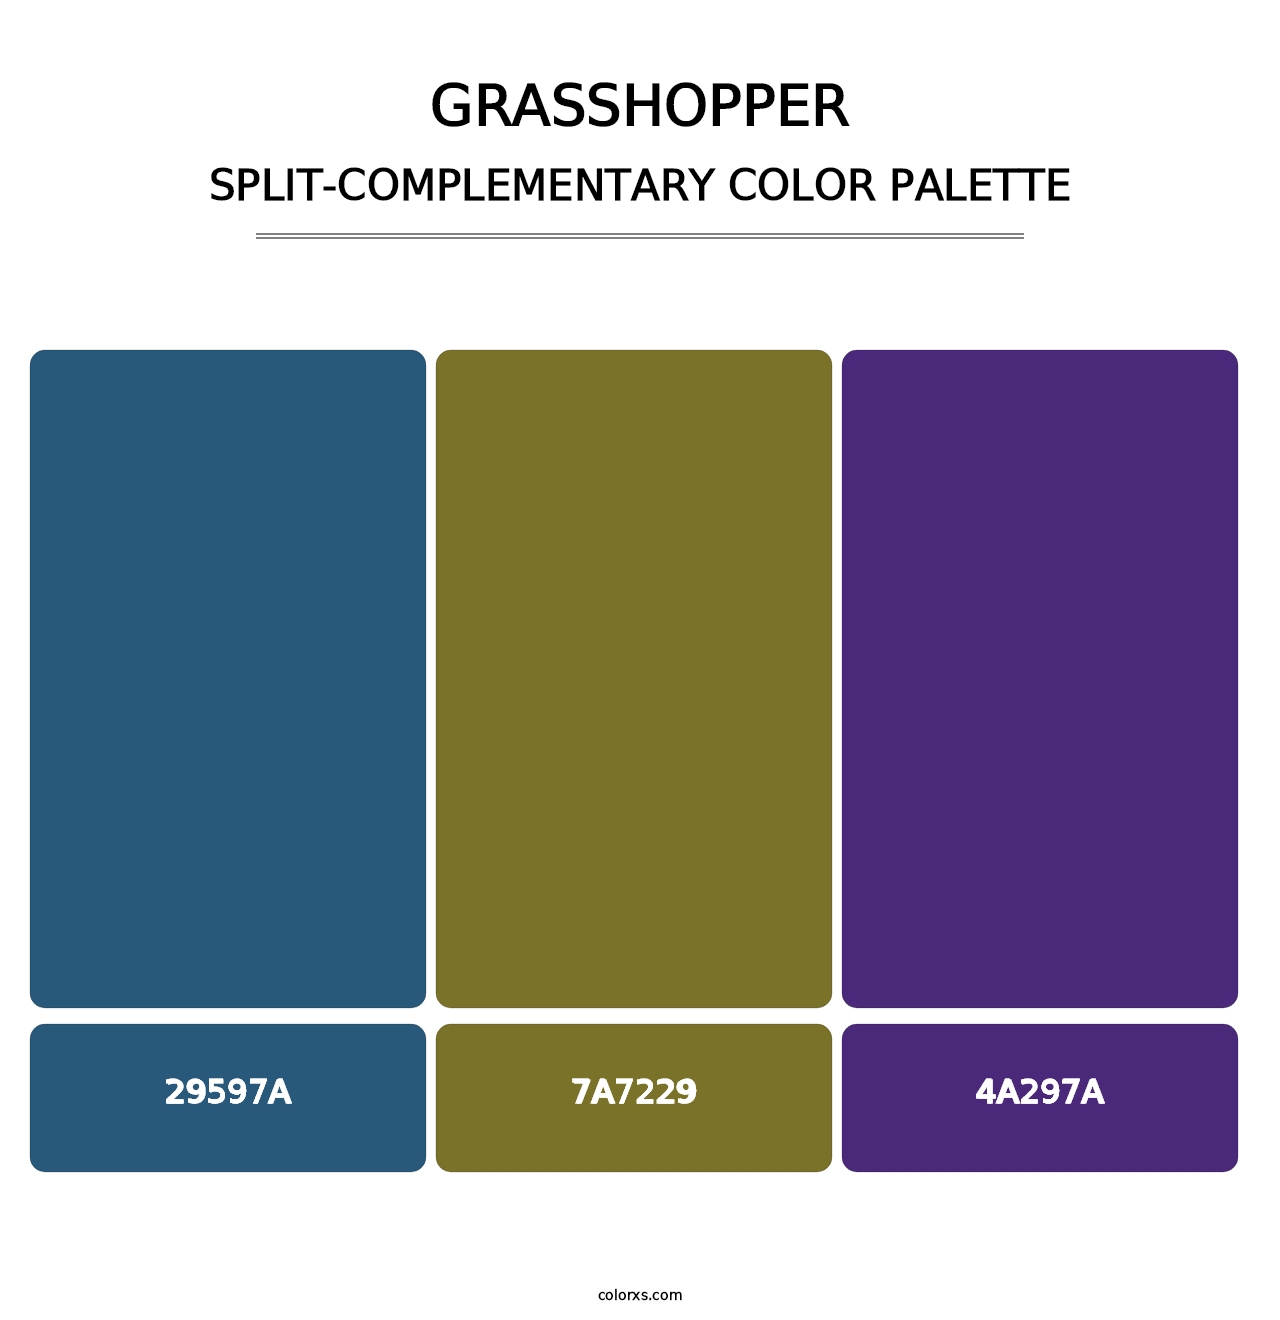 Grasshopper - Split-Complementary Color Palette